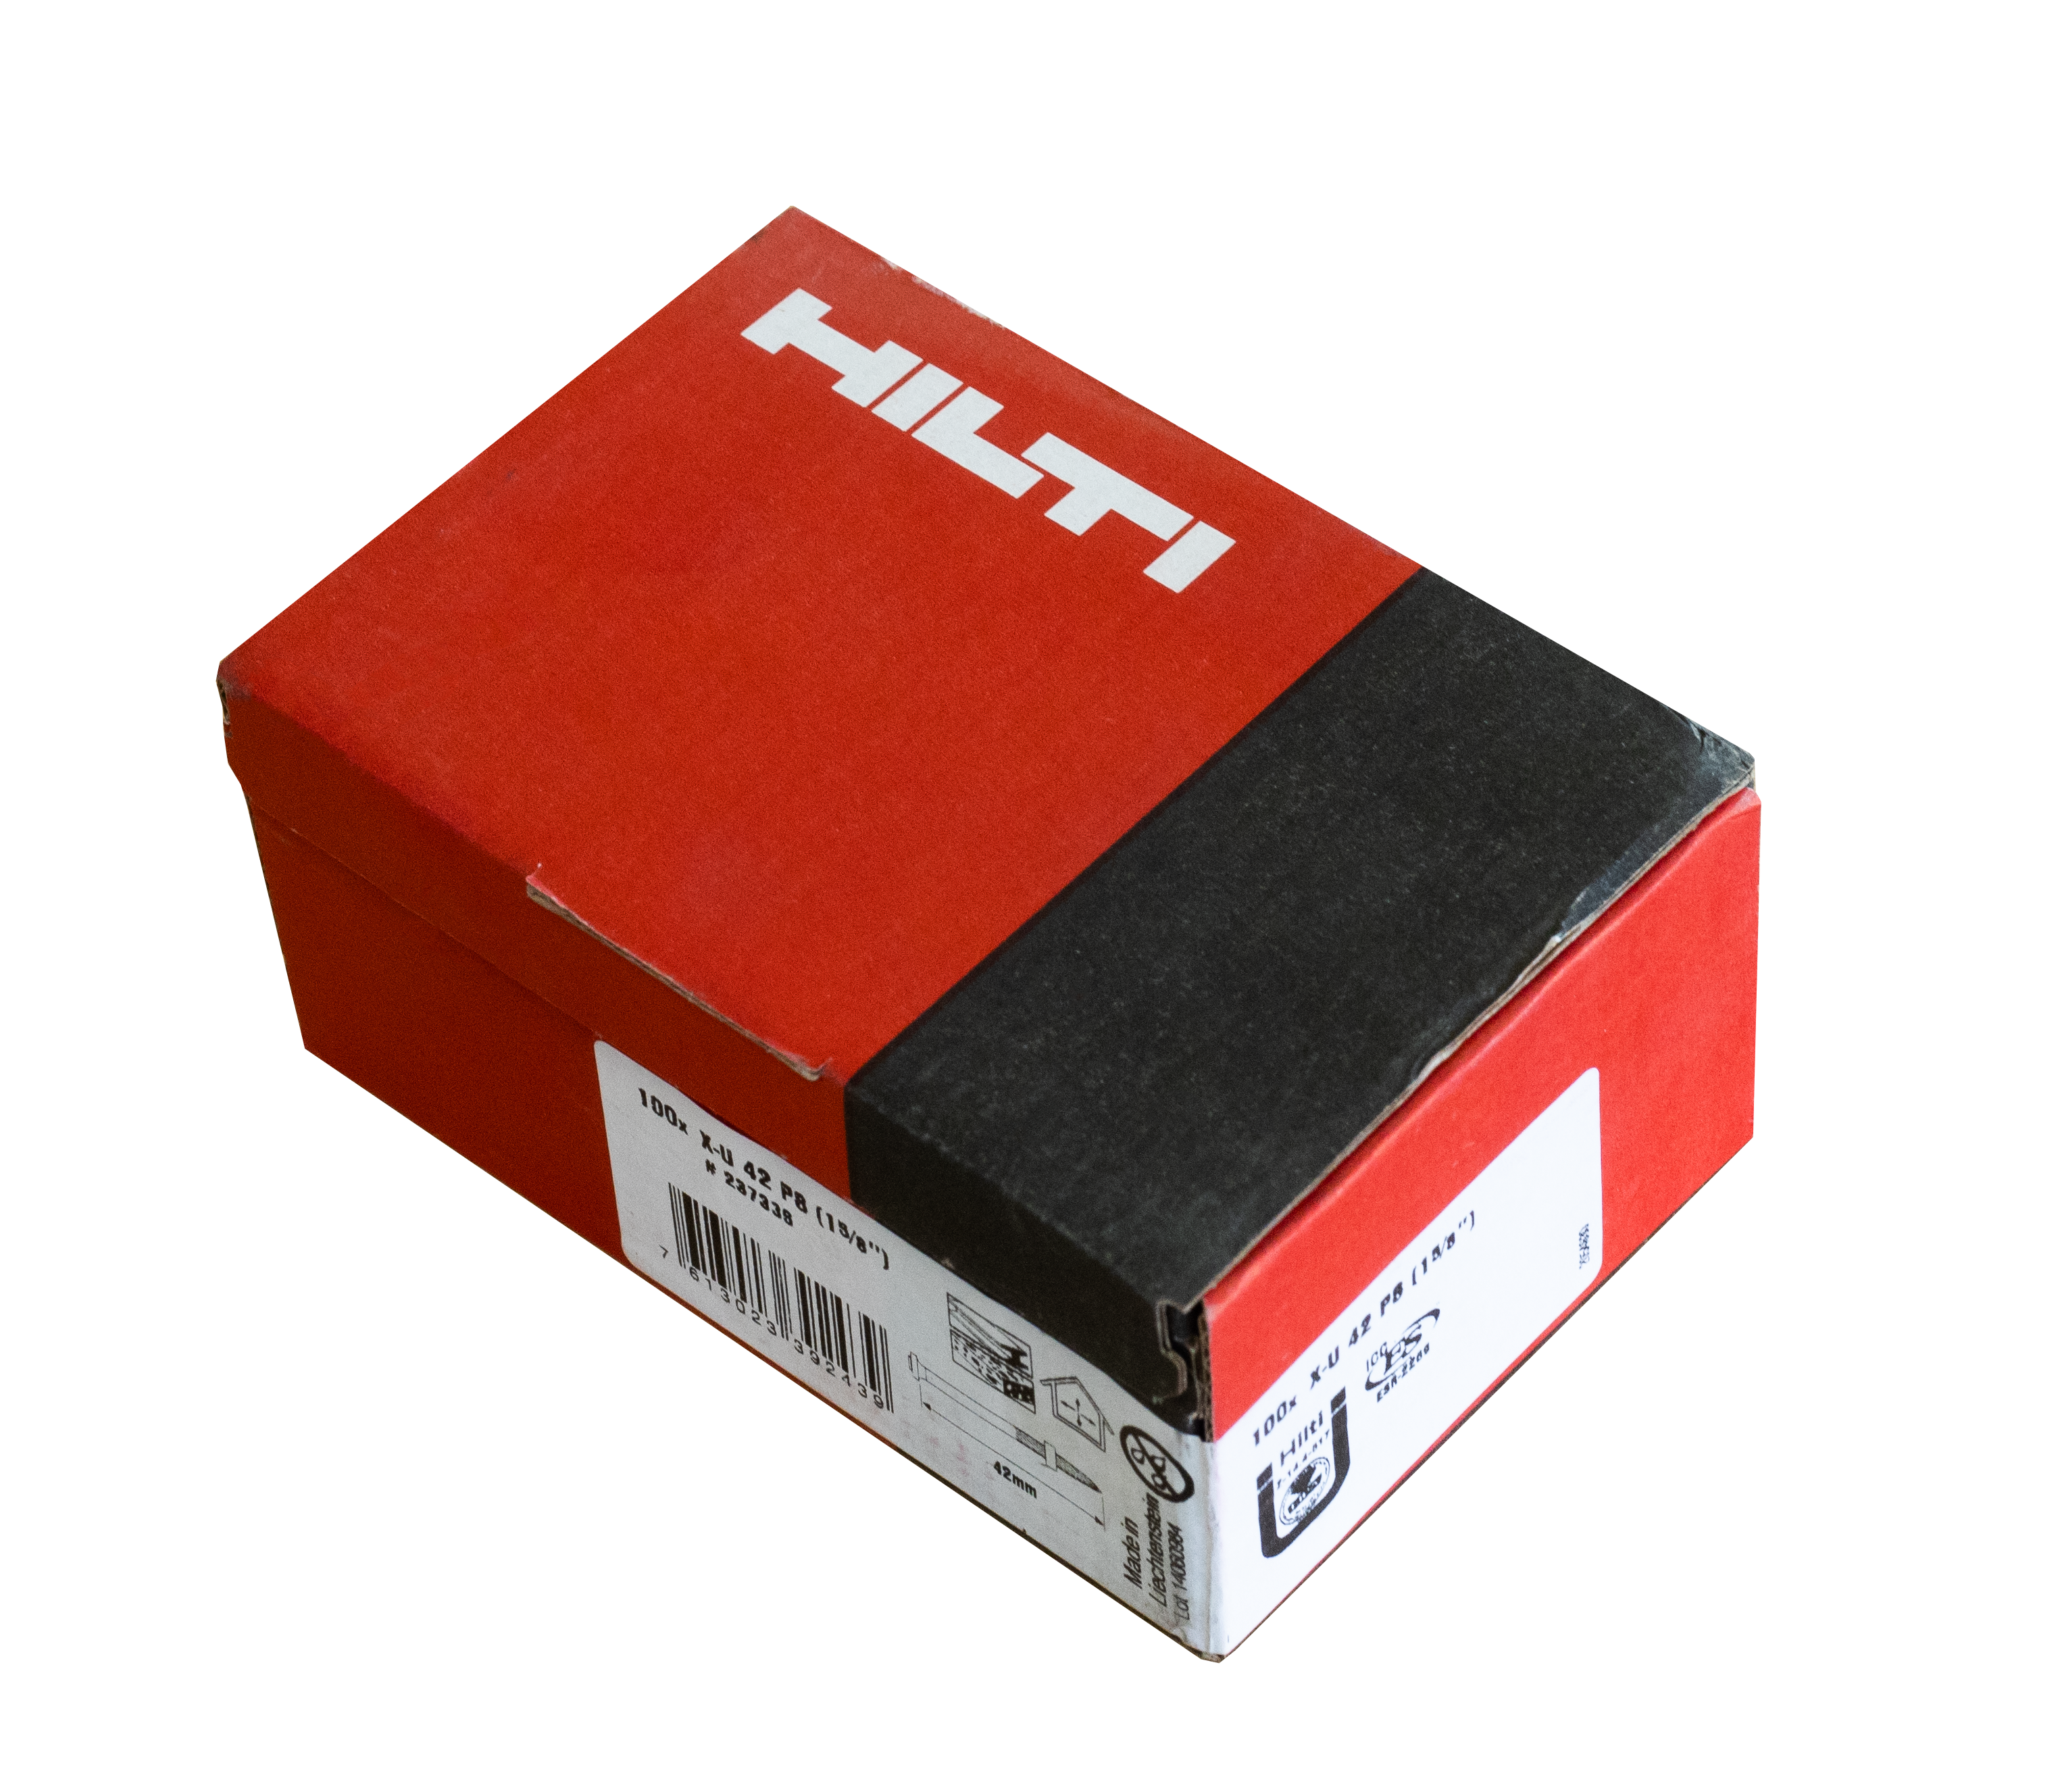 HILTI CONCRETE NAILS, 2 Box of 100 X-C 20 MX 20 MX #2091265 20mm (3/4”)  £5.00 - PicClick UK